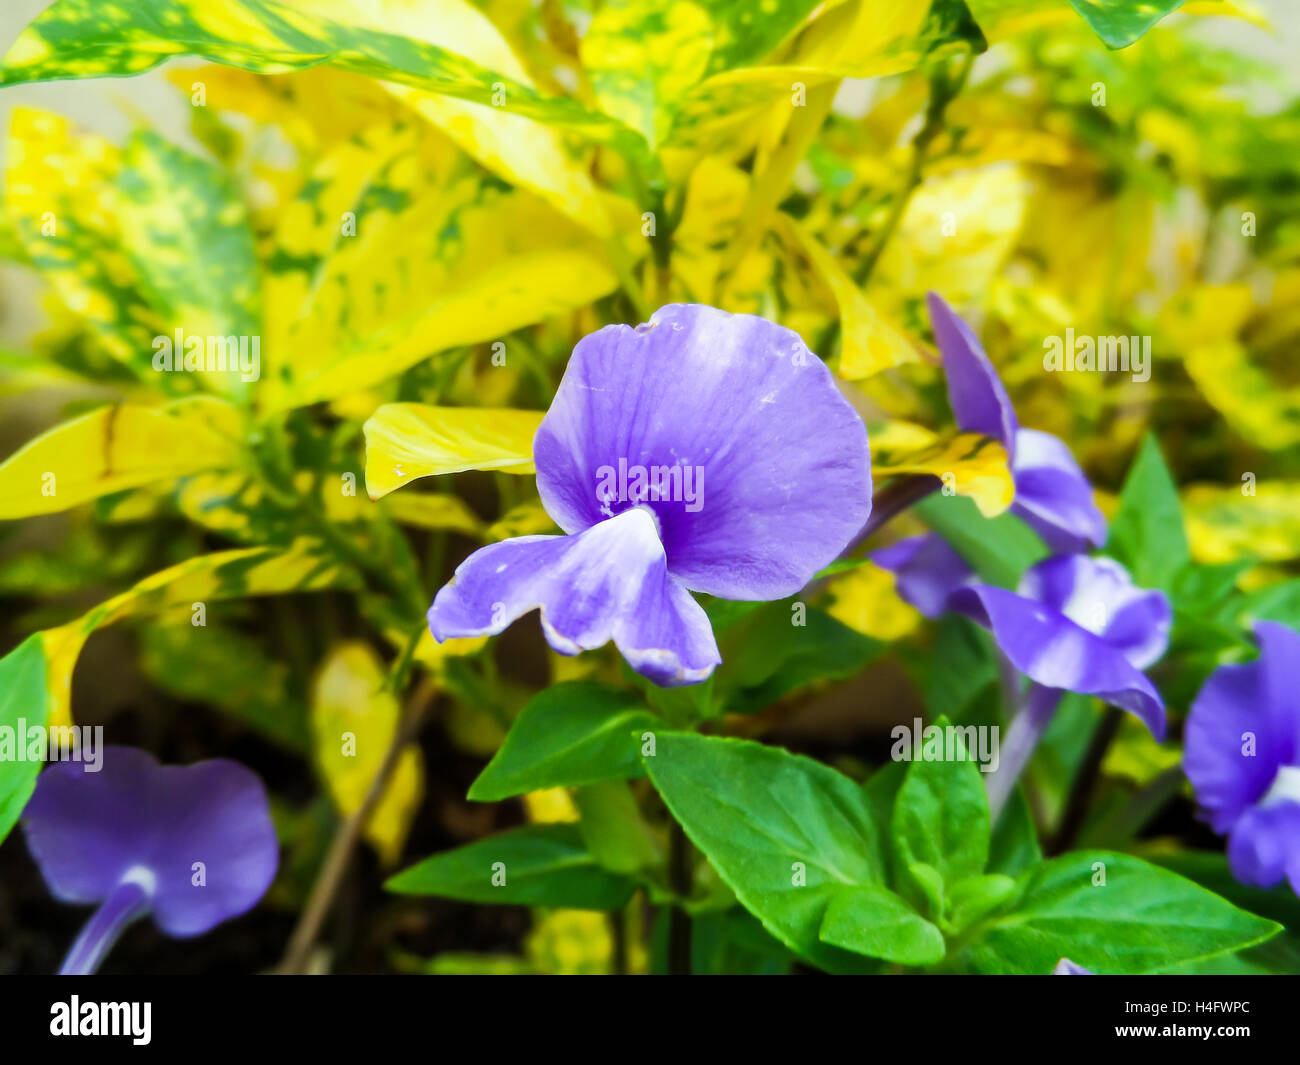 Otacanthus caeruleus the name of purple white flower ,Thailand call Blue Hawai Stock Photo